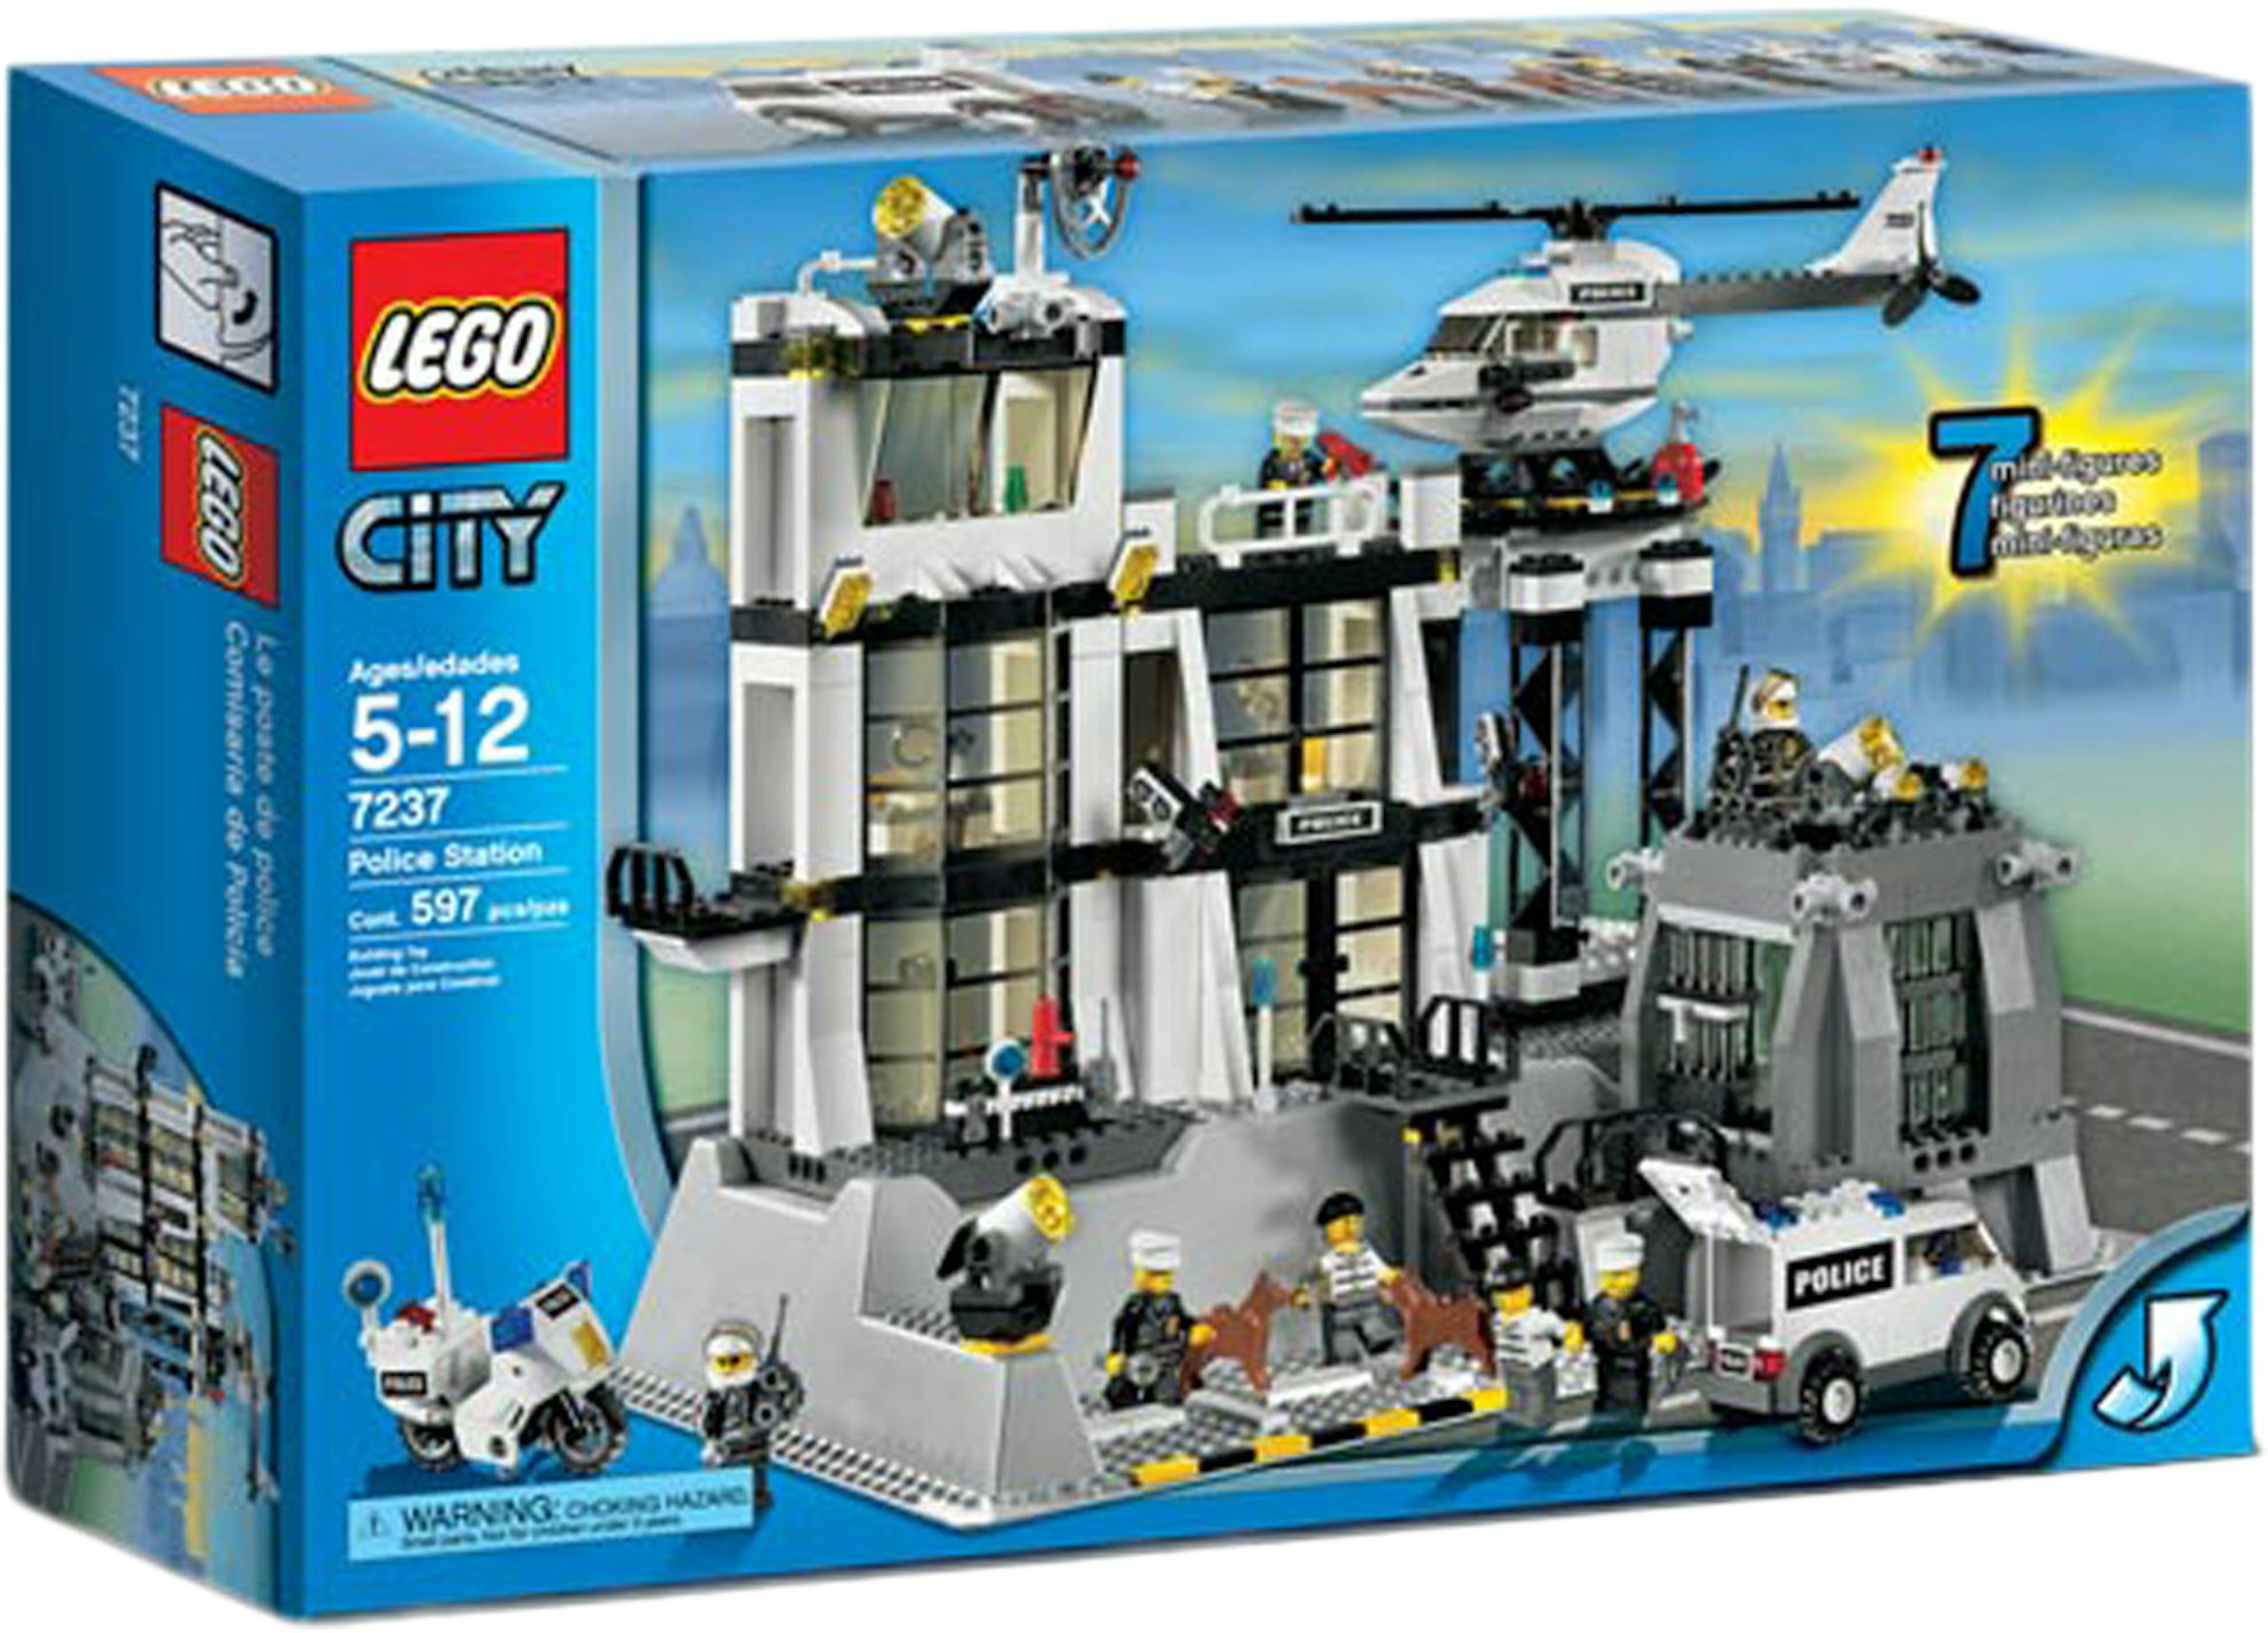 LEGO City Police Station Set 7237 - US